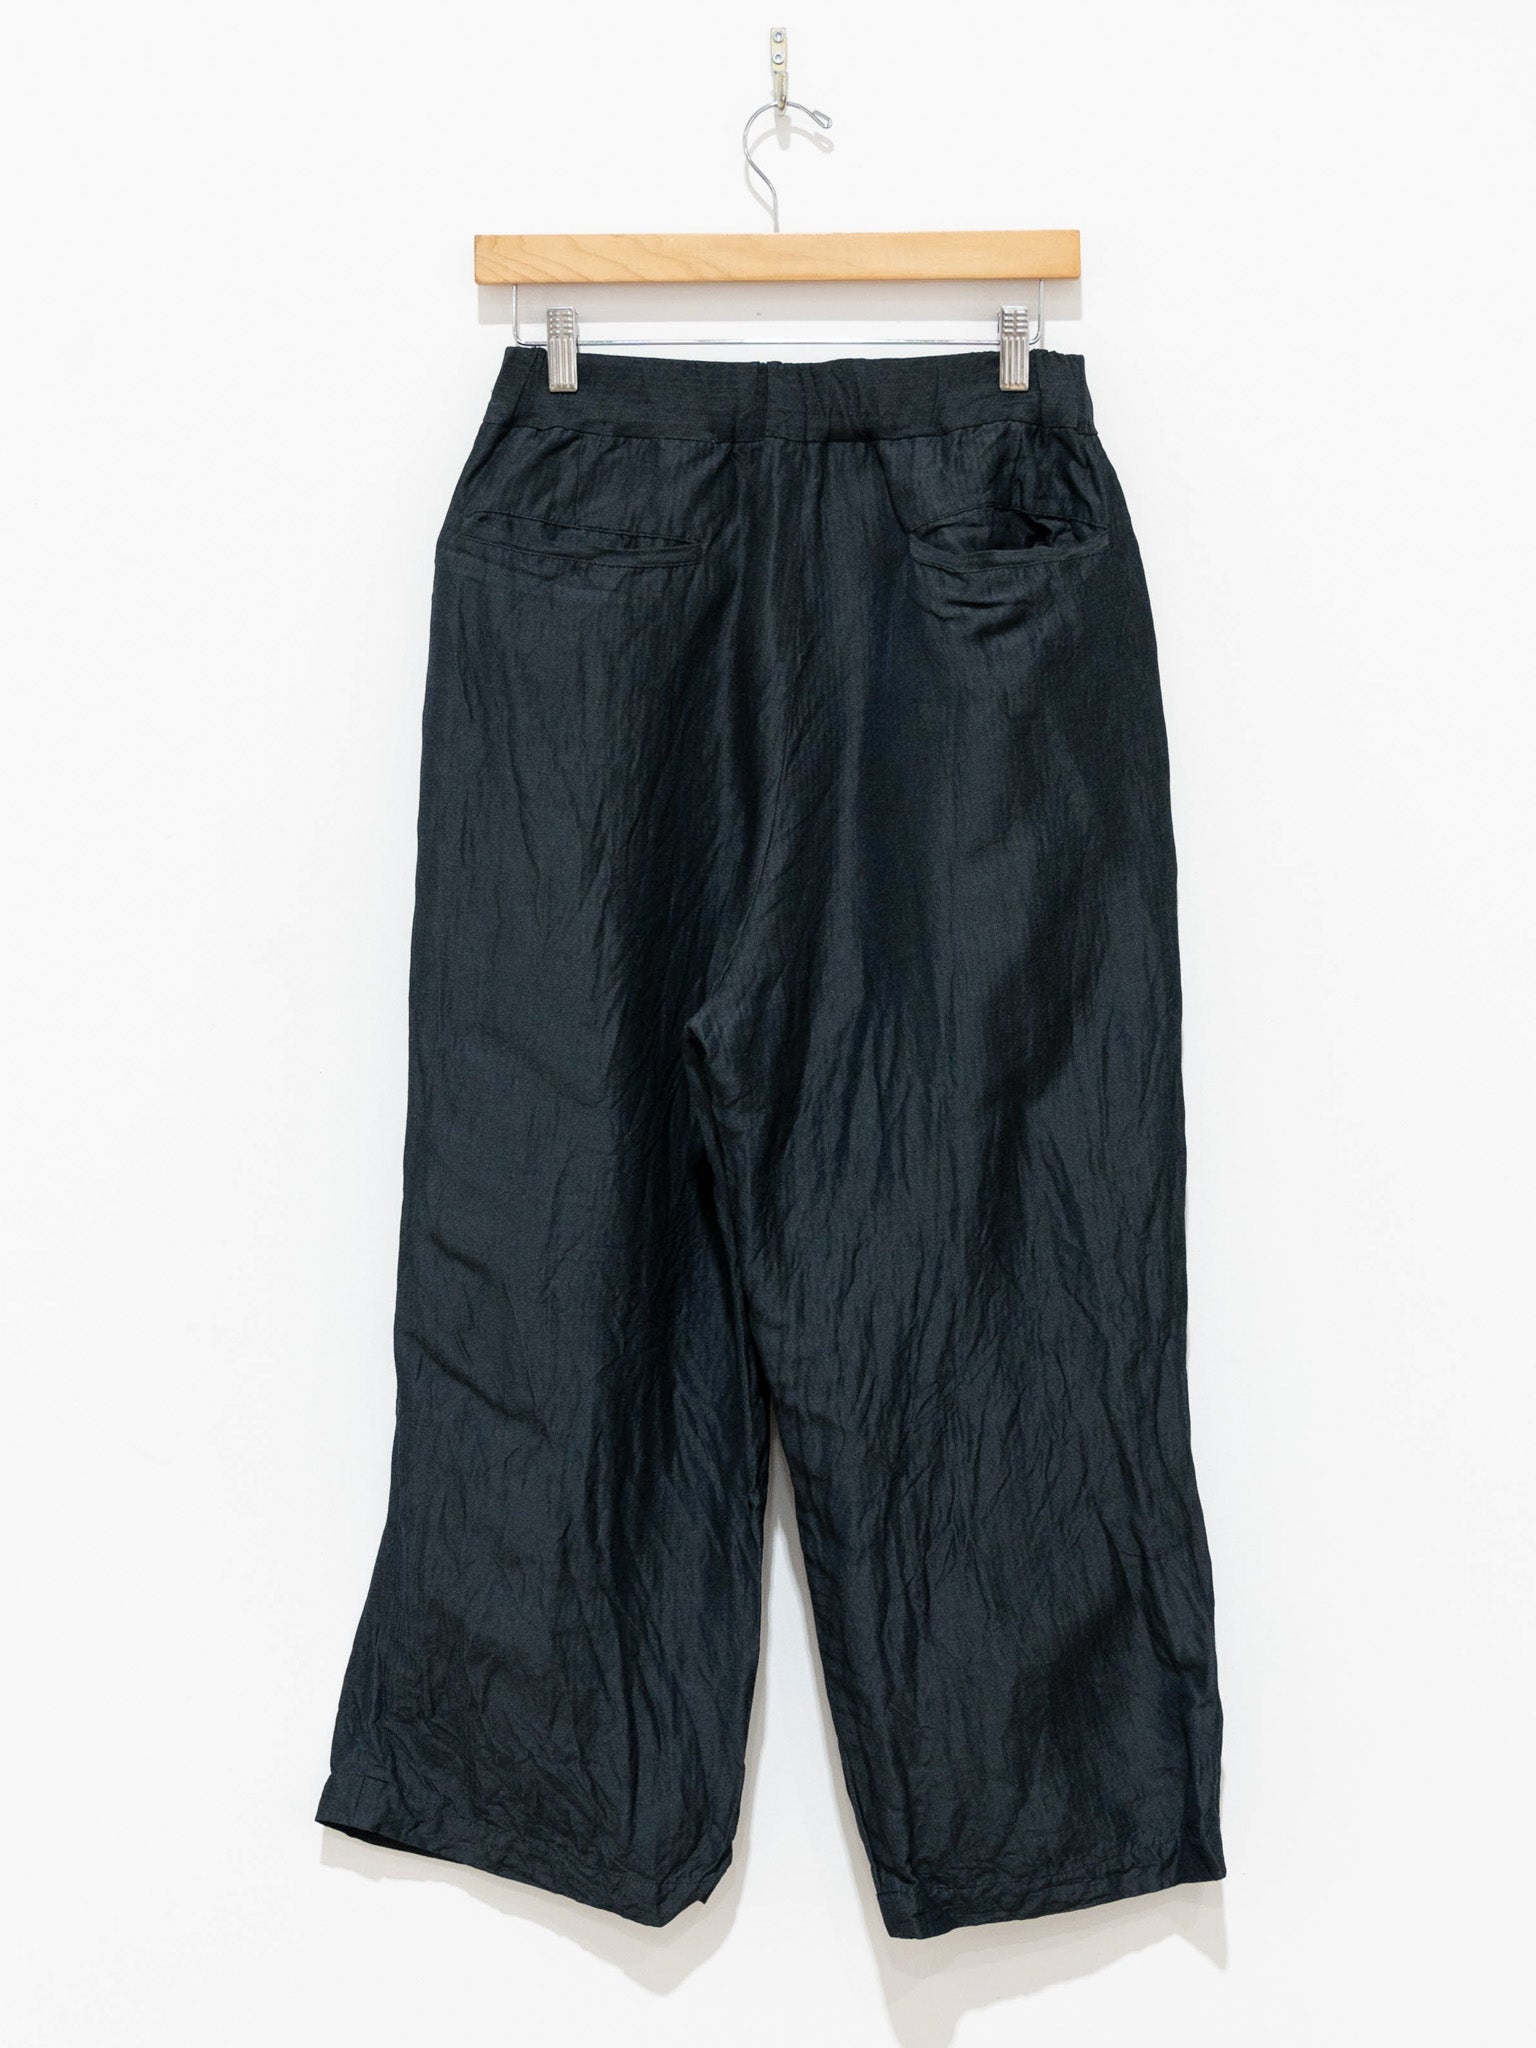 Namu Shop - Veritecoeur Tuck Pants - Charcoal